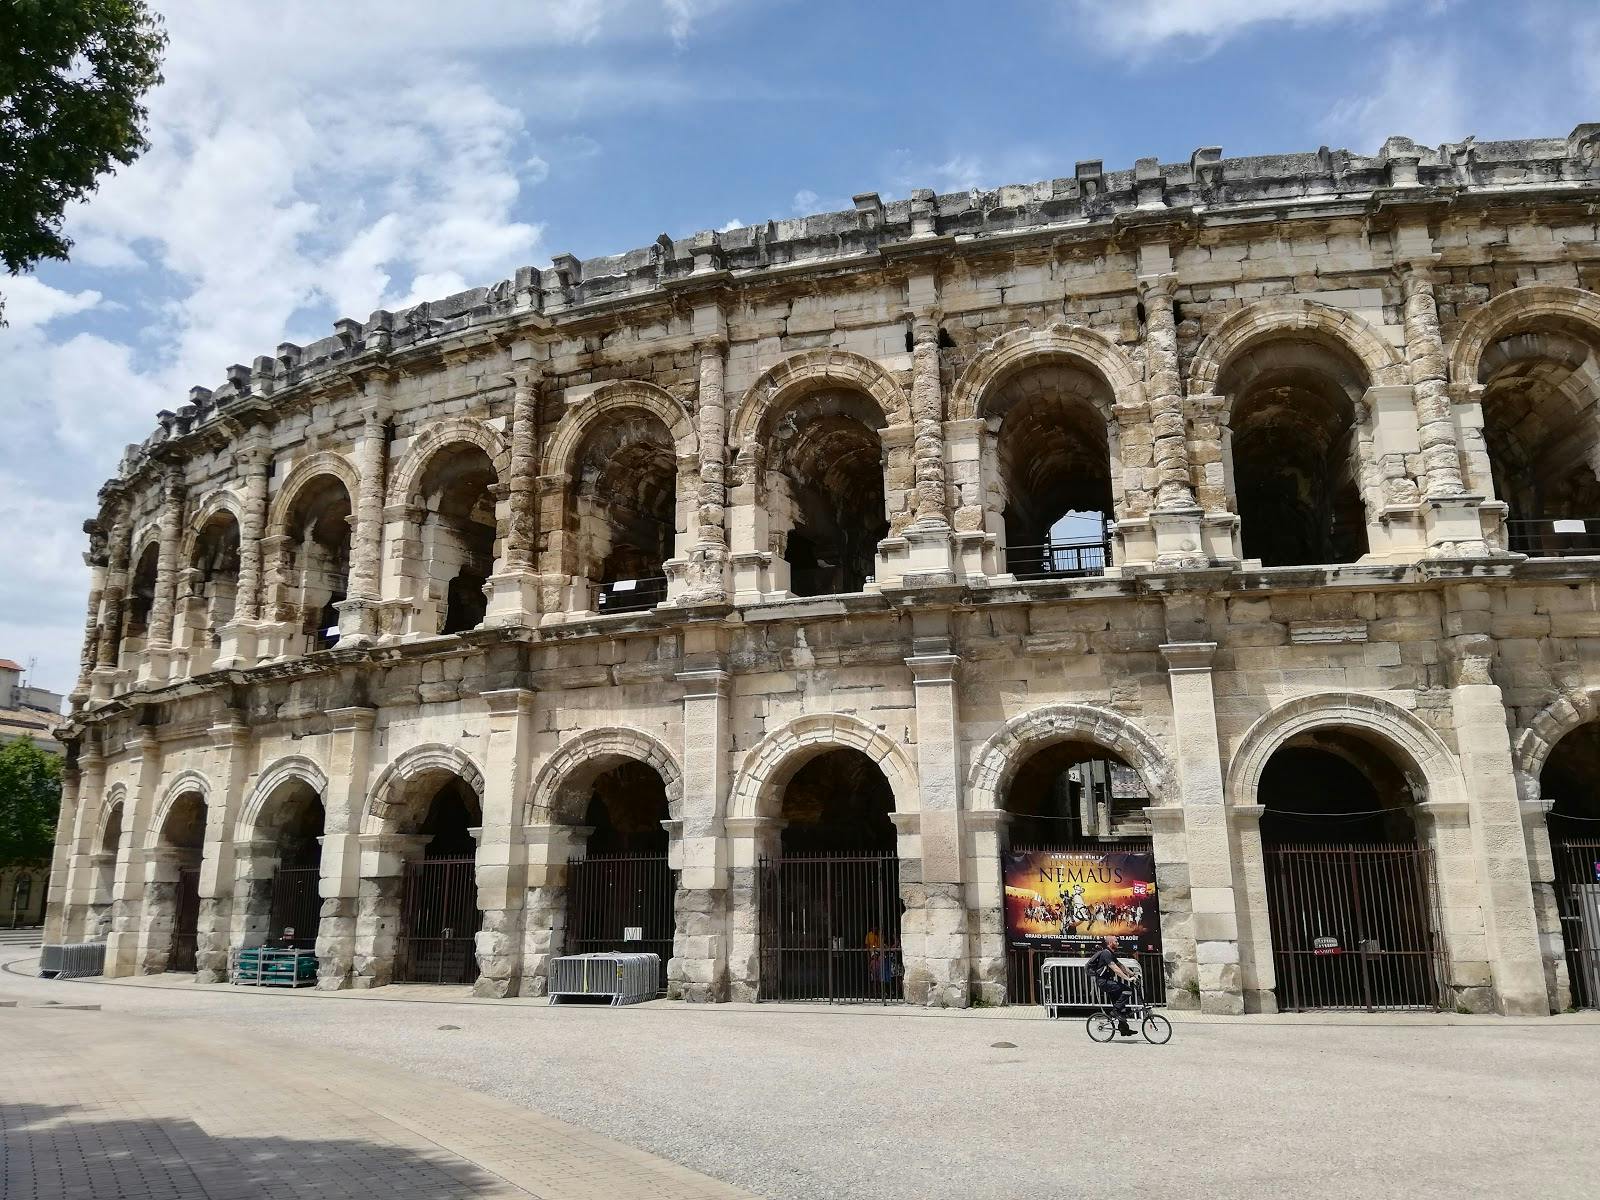 Image - Arena of Nîmes